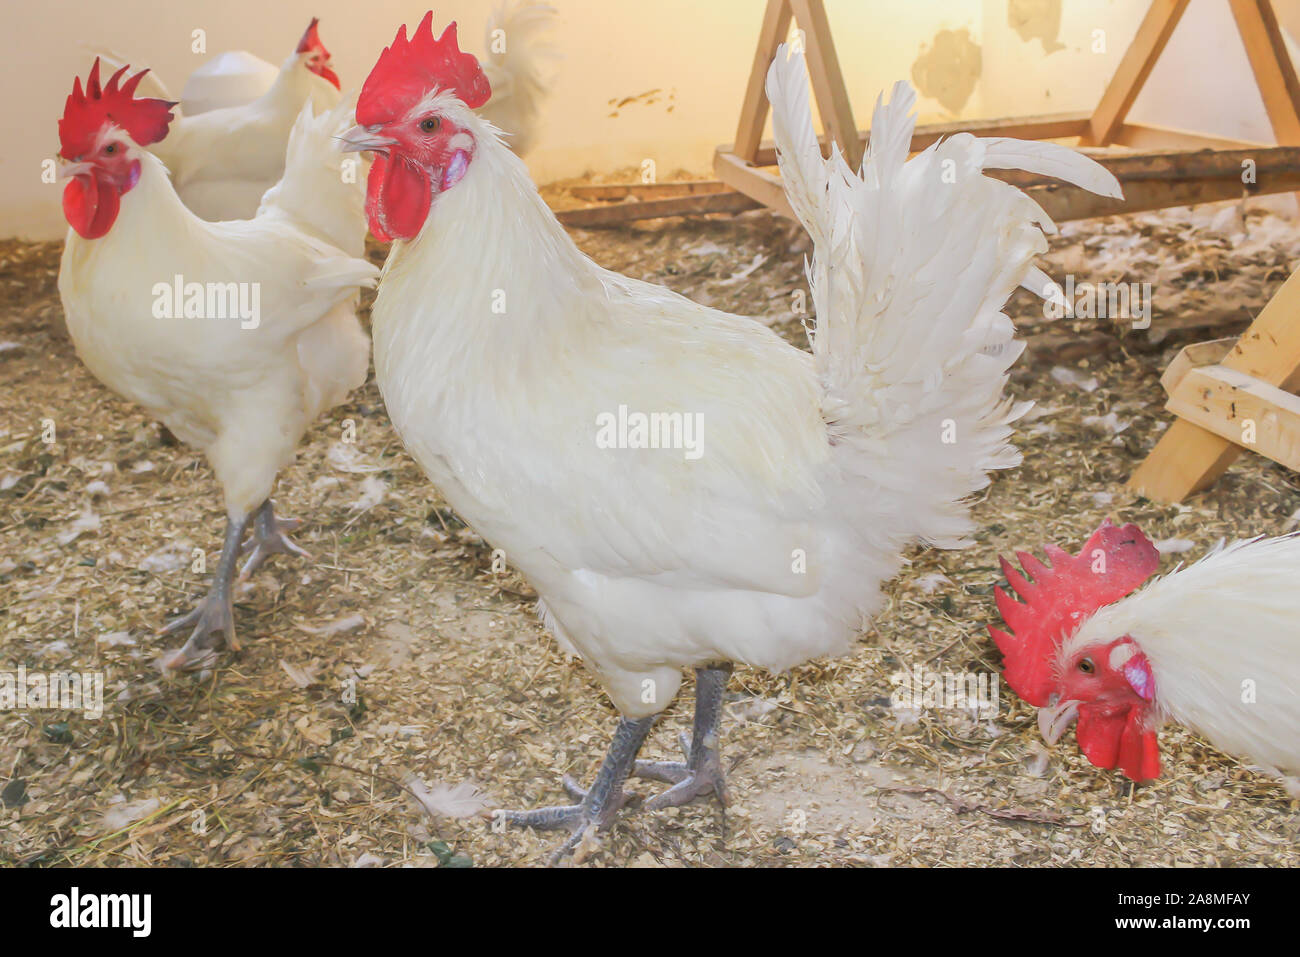 Bresse Gauloise pollo, Rooster, Huhn, Hahn, 16 settimane di età, Janja in Bosnia Foto Stock